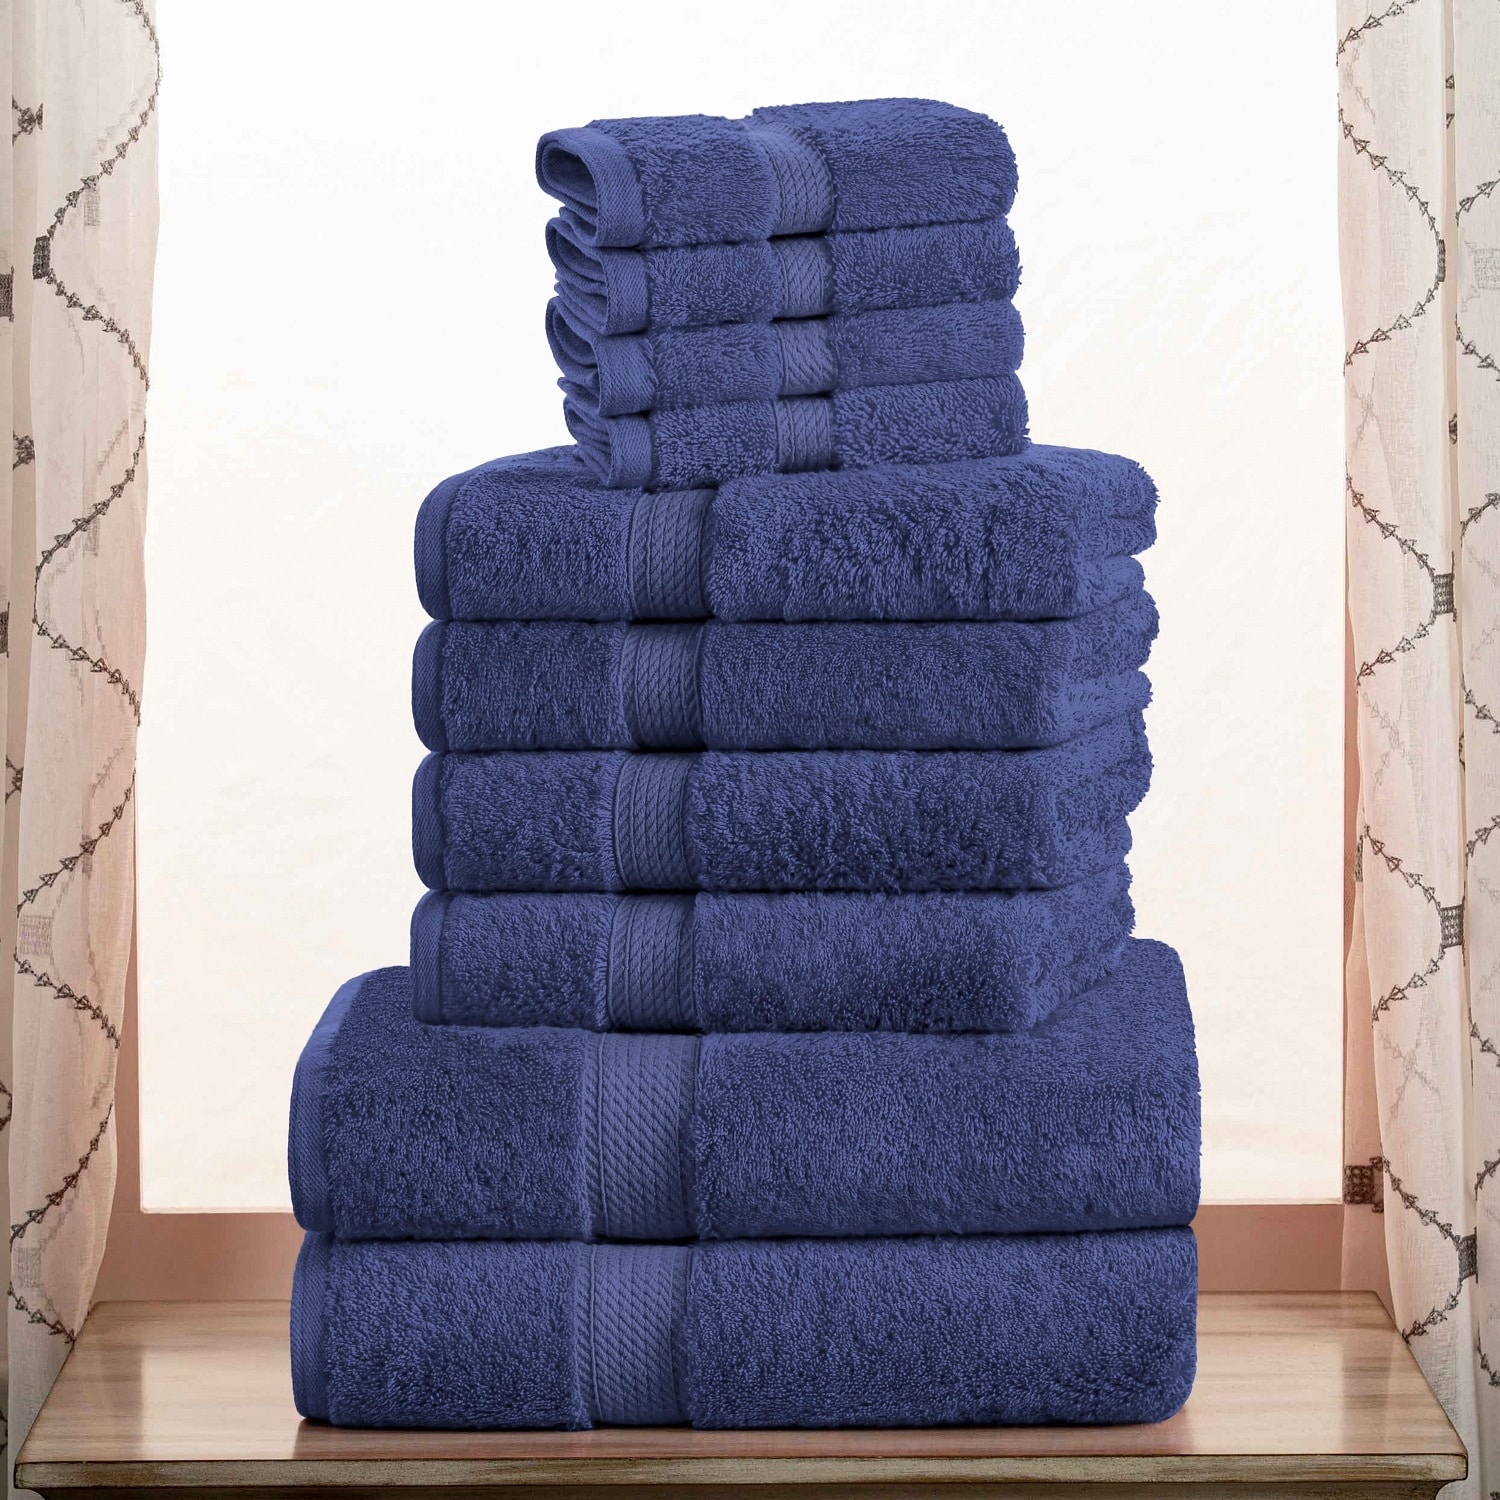 Egyptian Cotton Plush Heavyweight Absorbent Bath Towel Set of 4 Light Blue